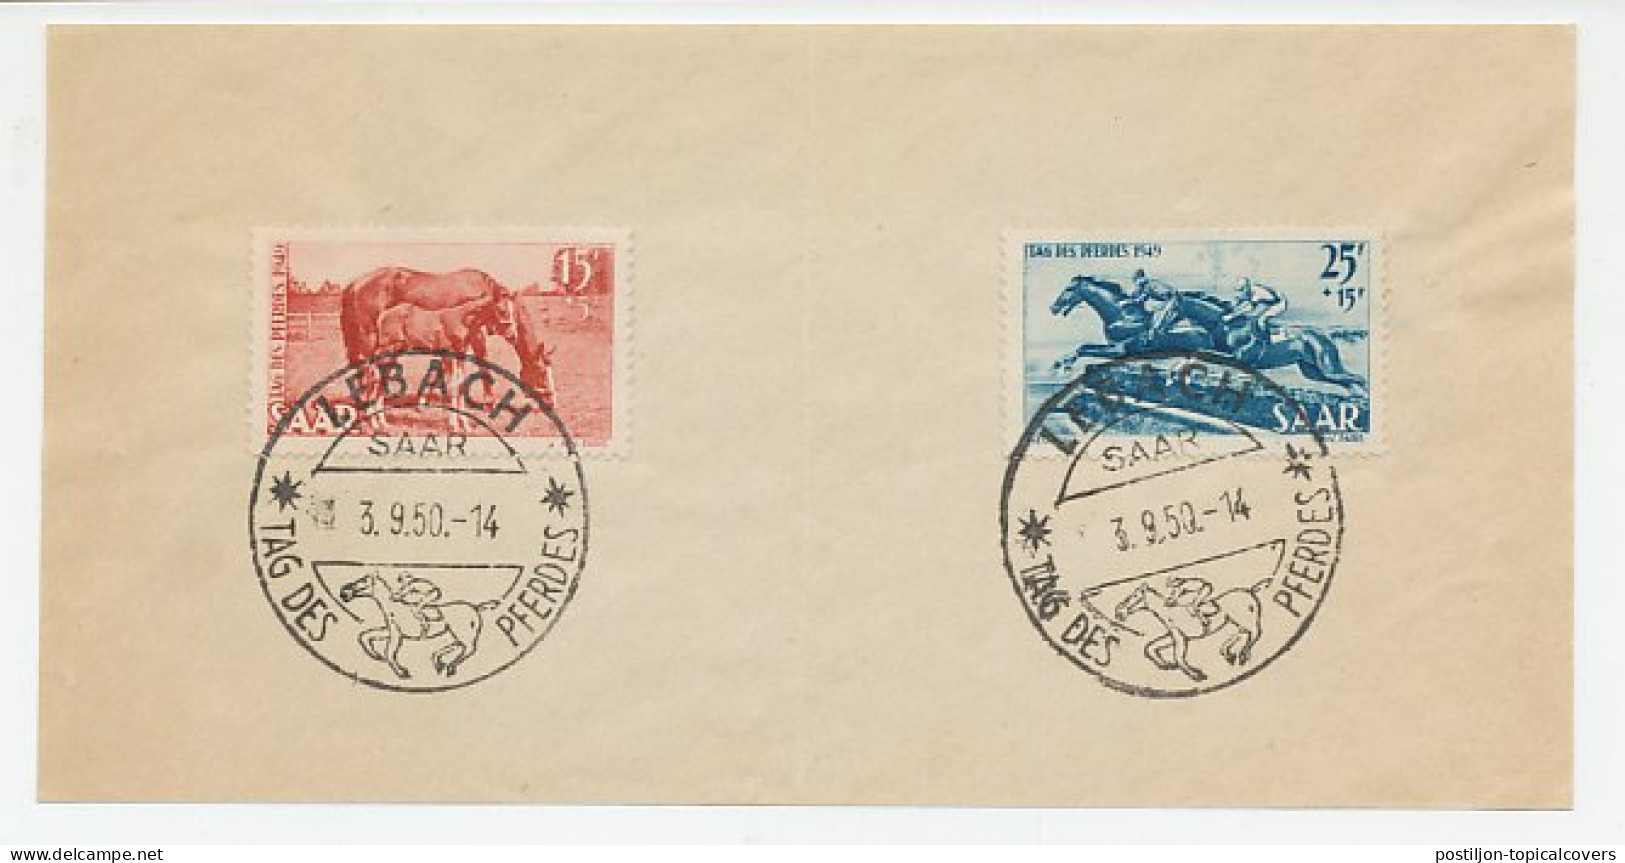 Piece Of Paper / Postmark Germany / Saar 1950 Horse Day - Horses